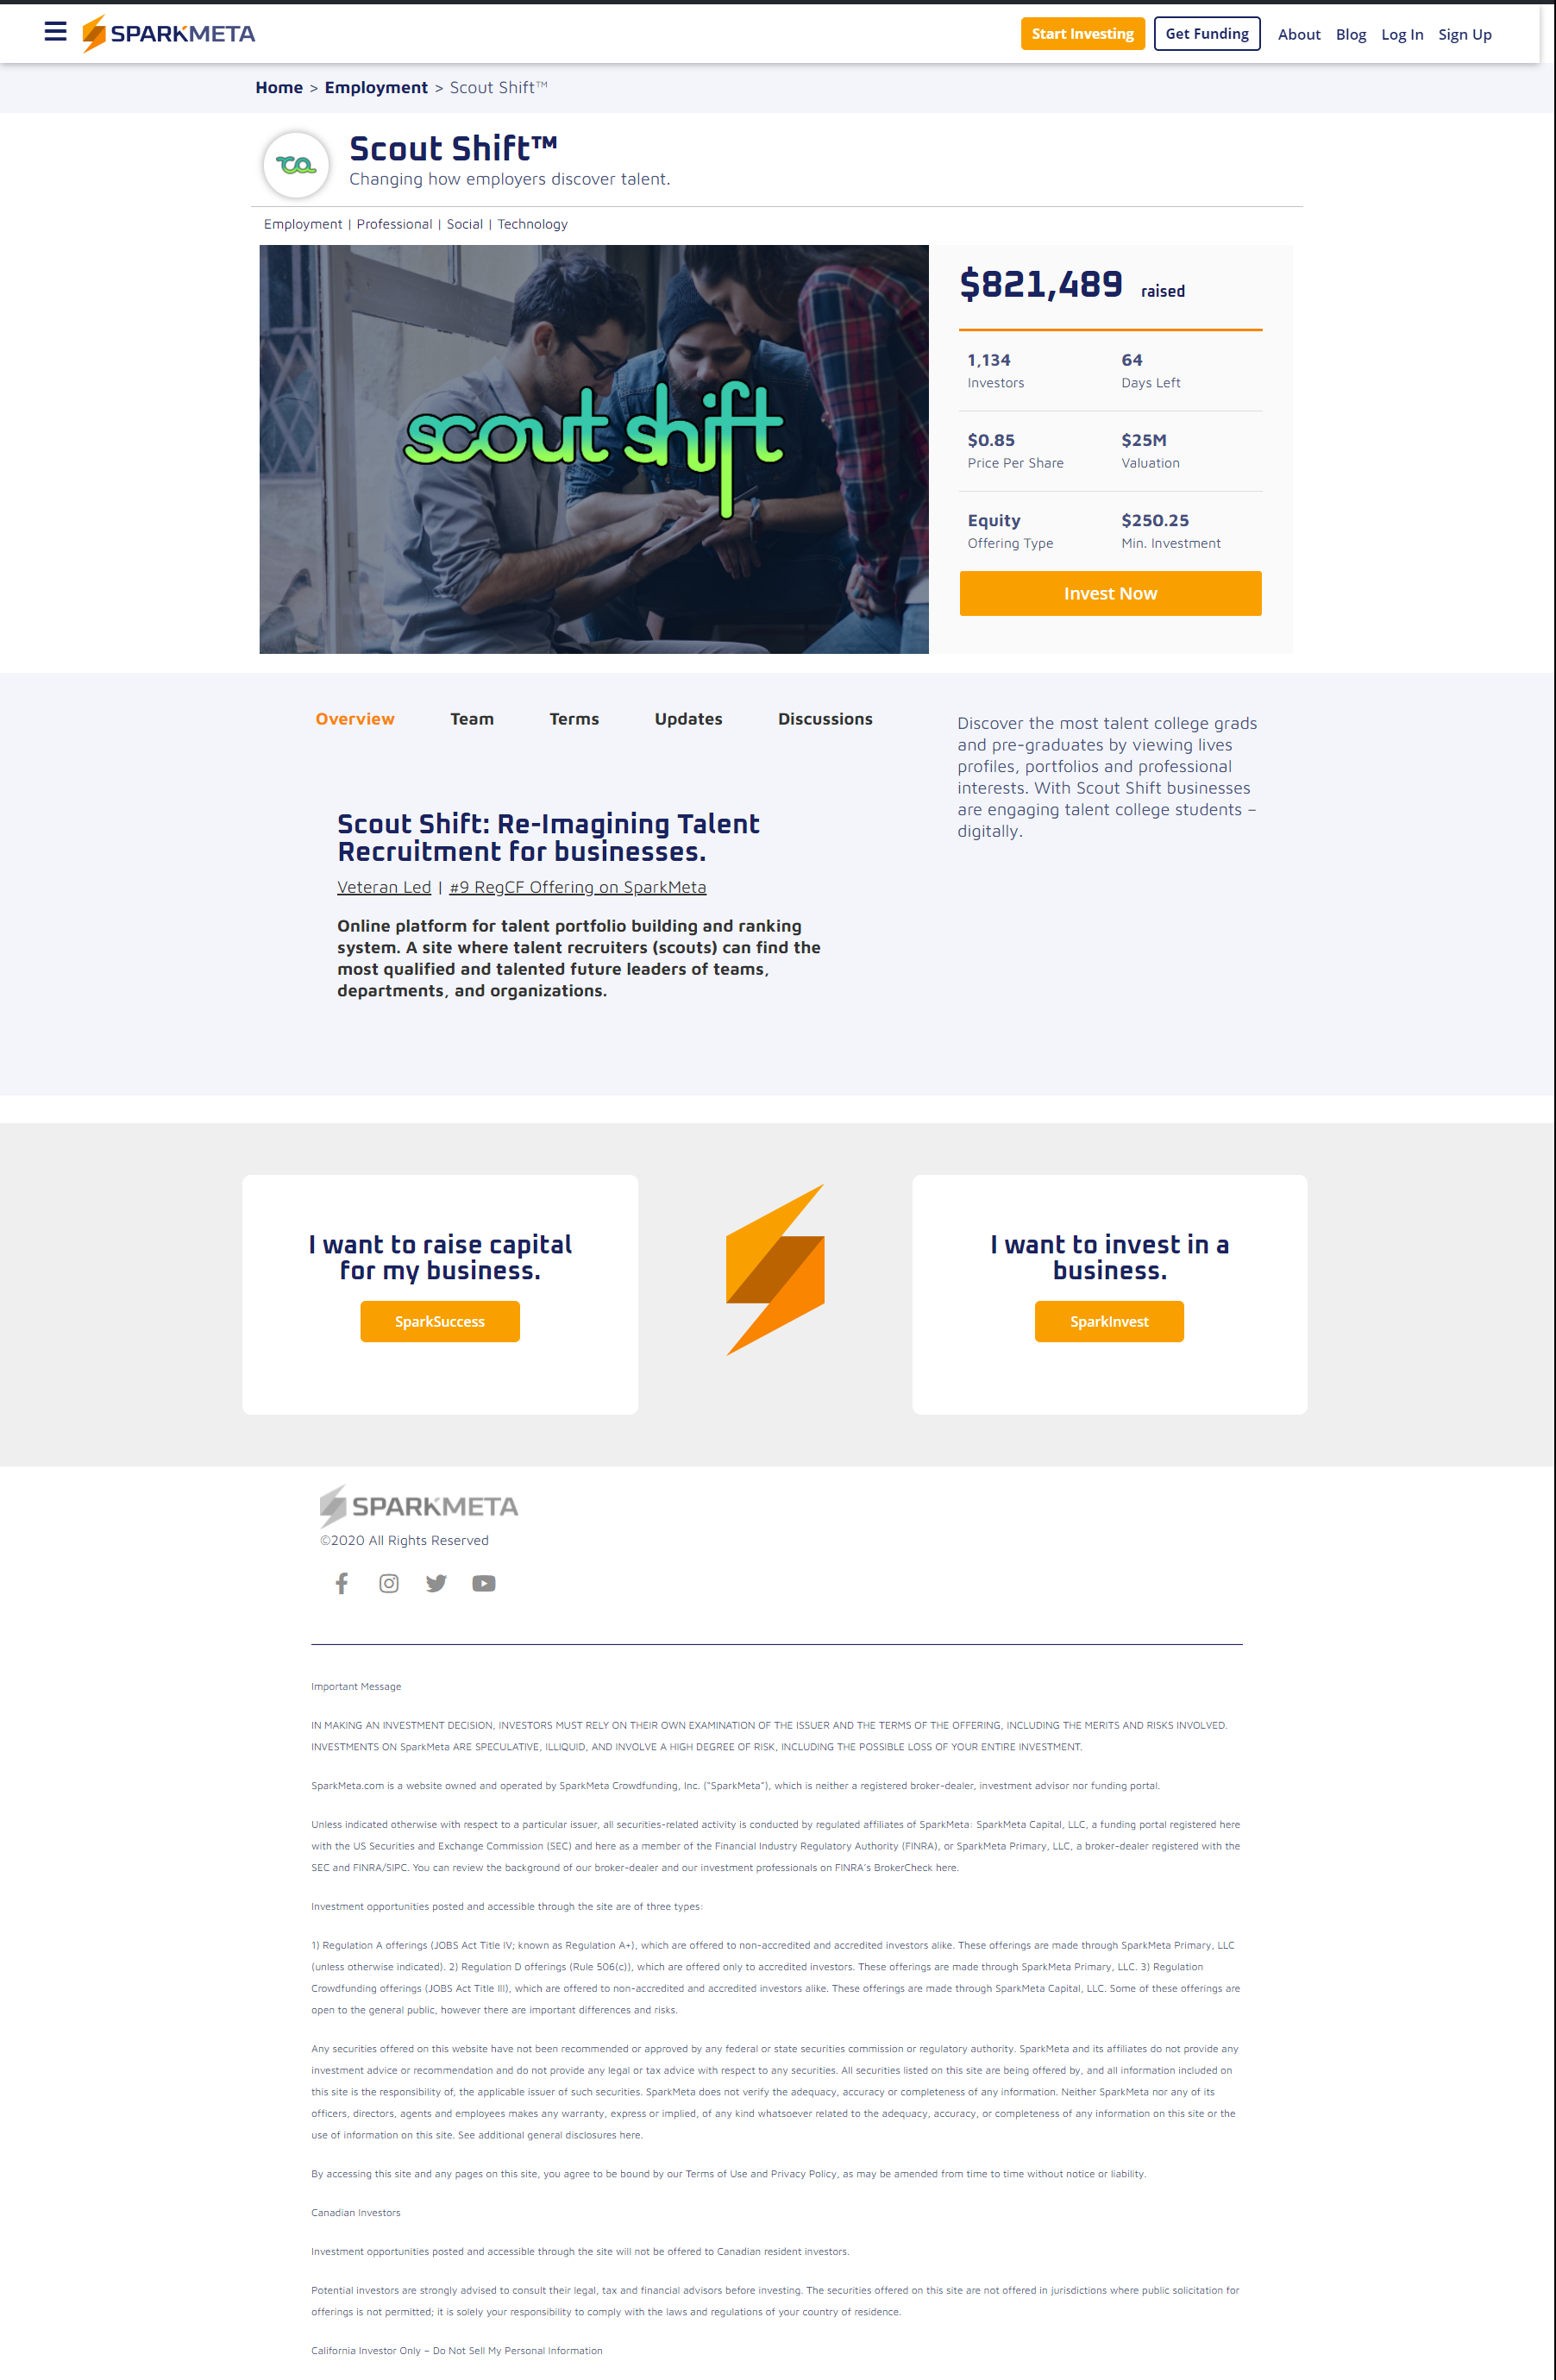 SparkMeta Investment Page Website Design